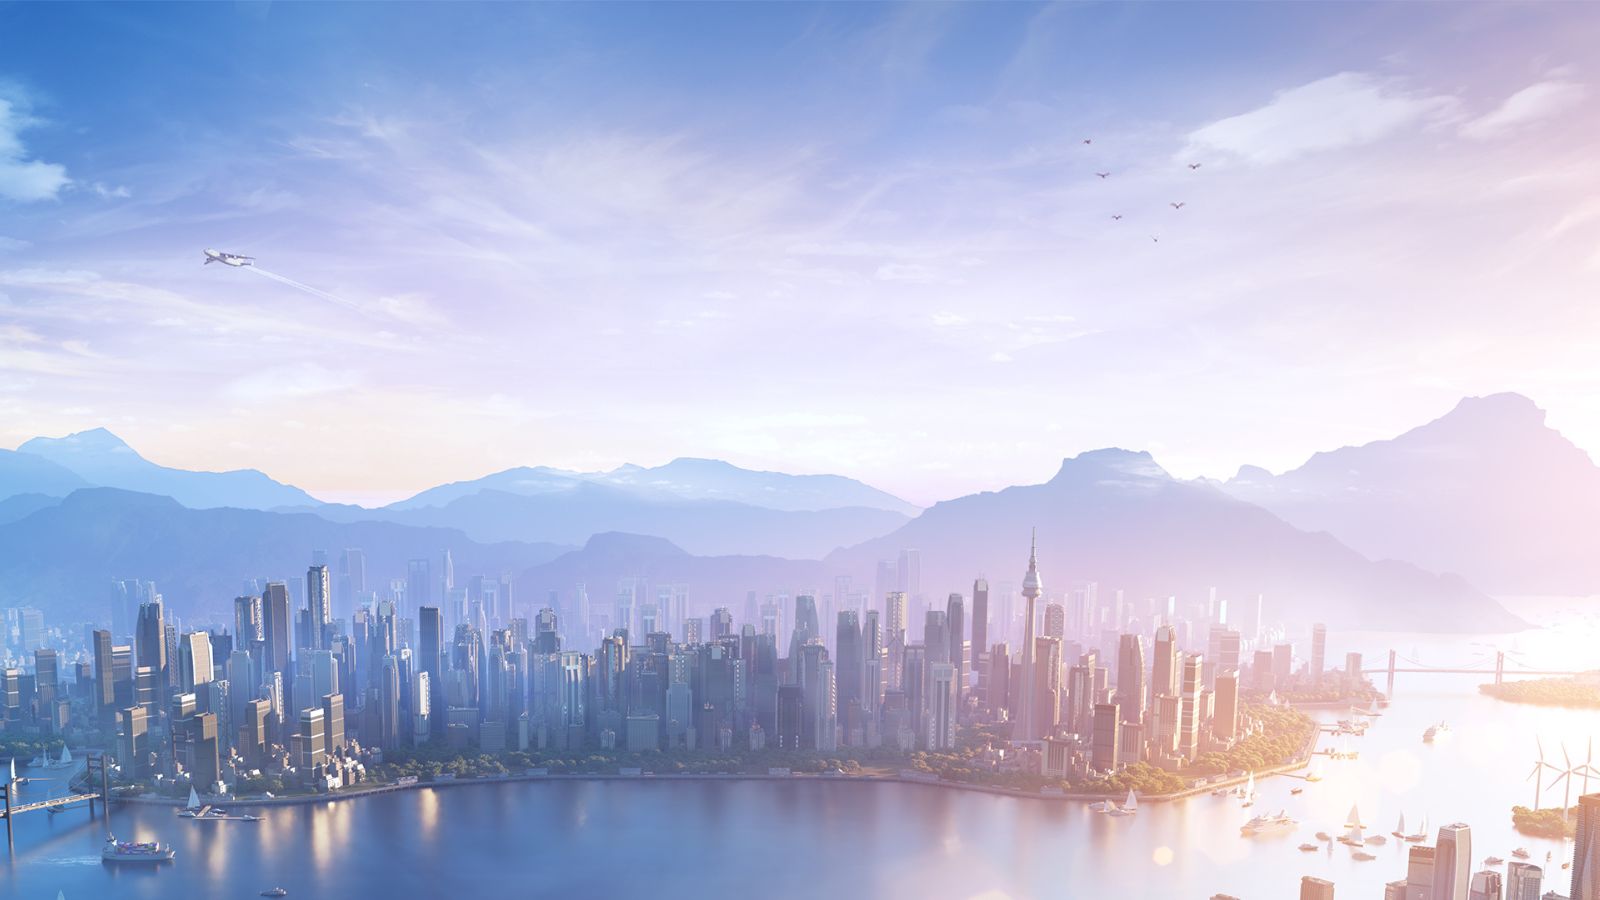 Cities: Skylines II PlayStation 5 - Best Buy